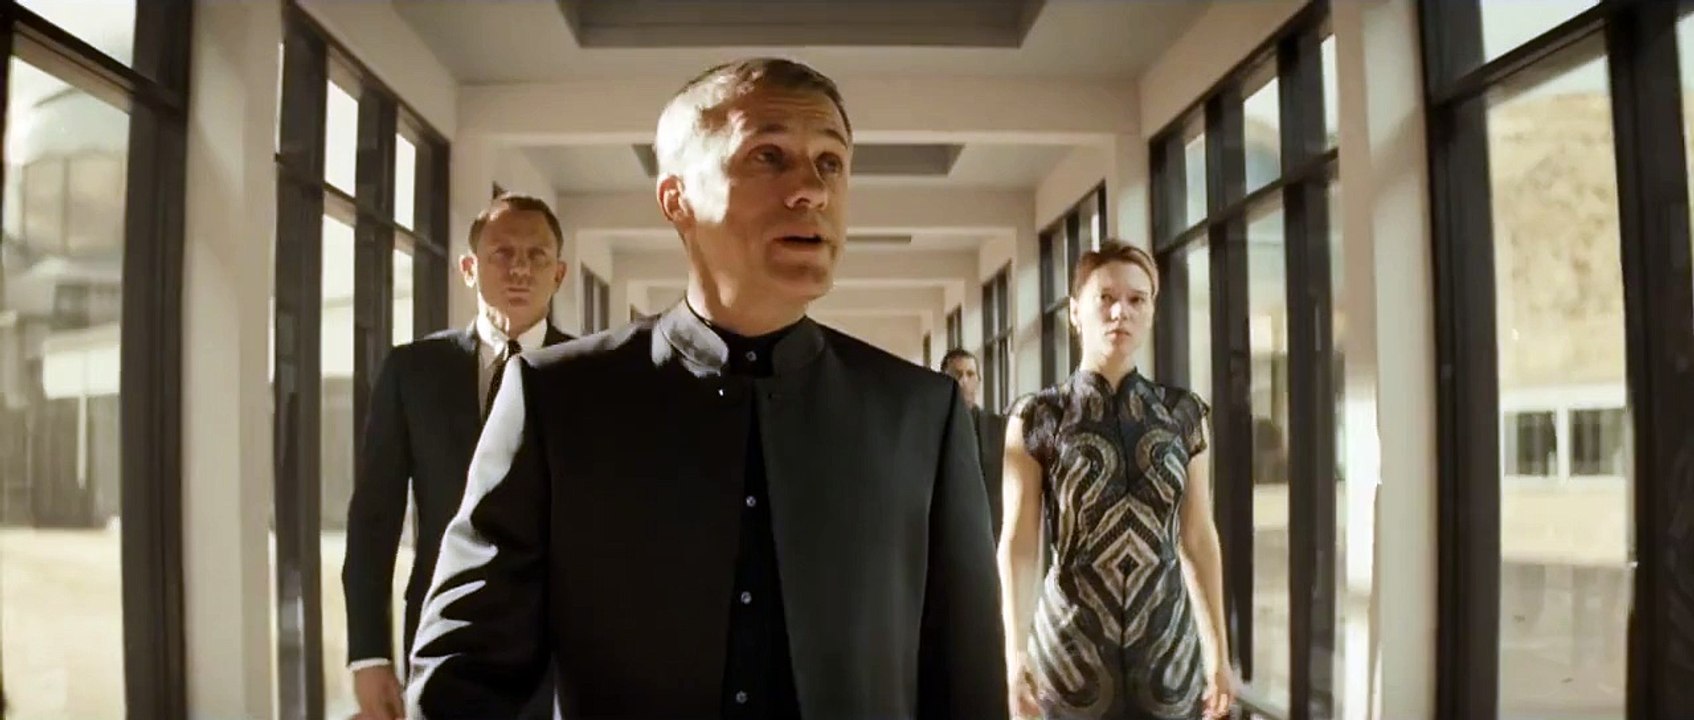 JAMES BOND 007 - SPECTRE Trailer & Filmclips deutsch german